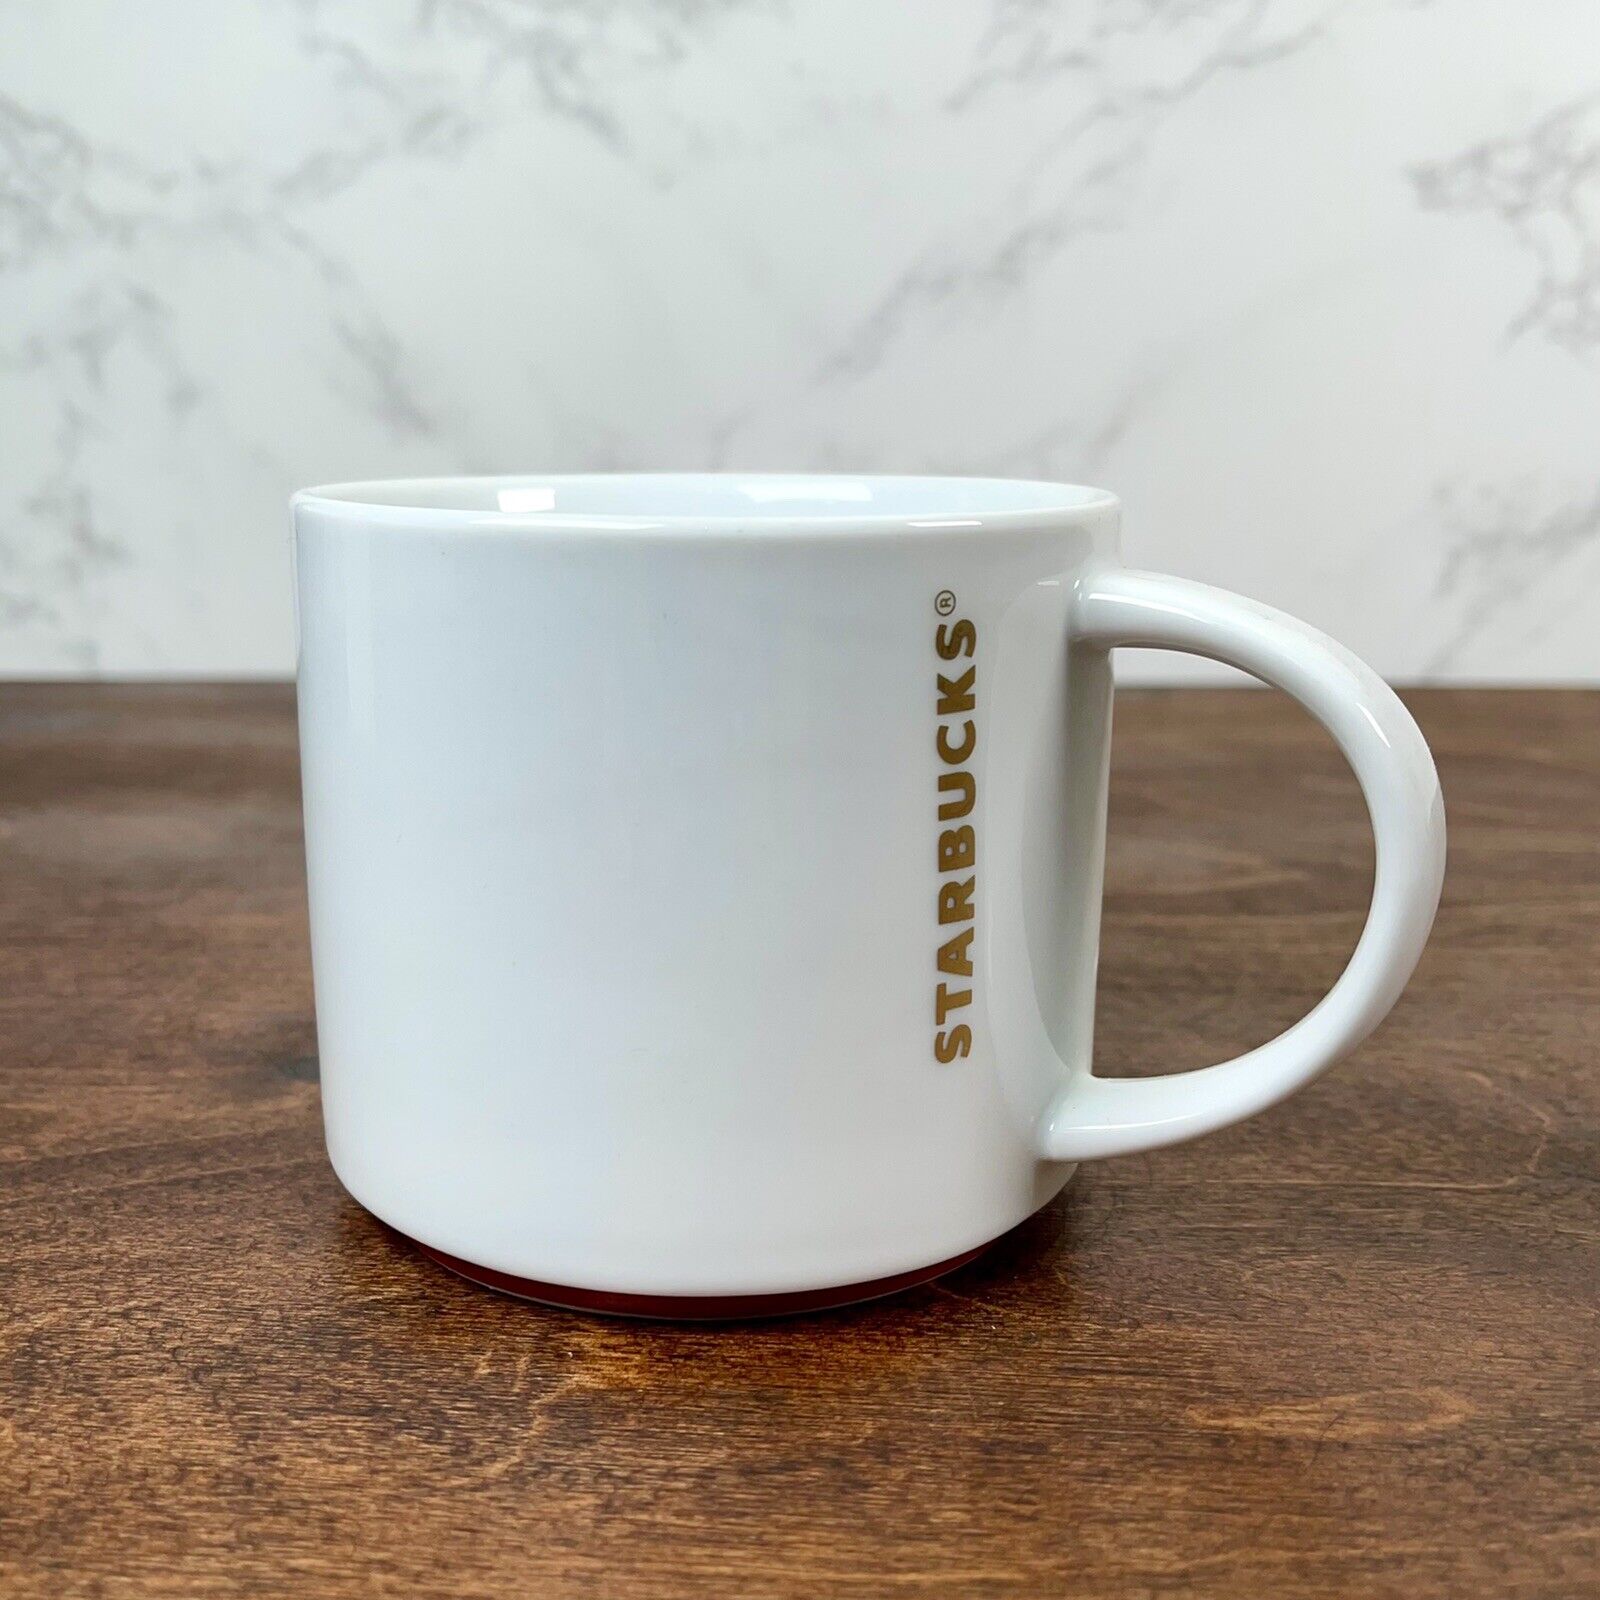 Starbucks 2012 Coffee Tea Mug Cup 16 oz / 473 ml Porcelain White w/ Gold Writing